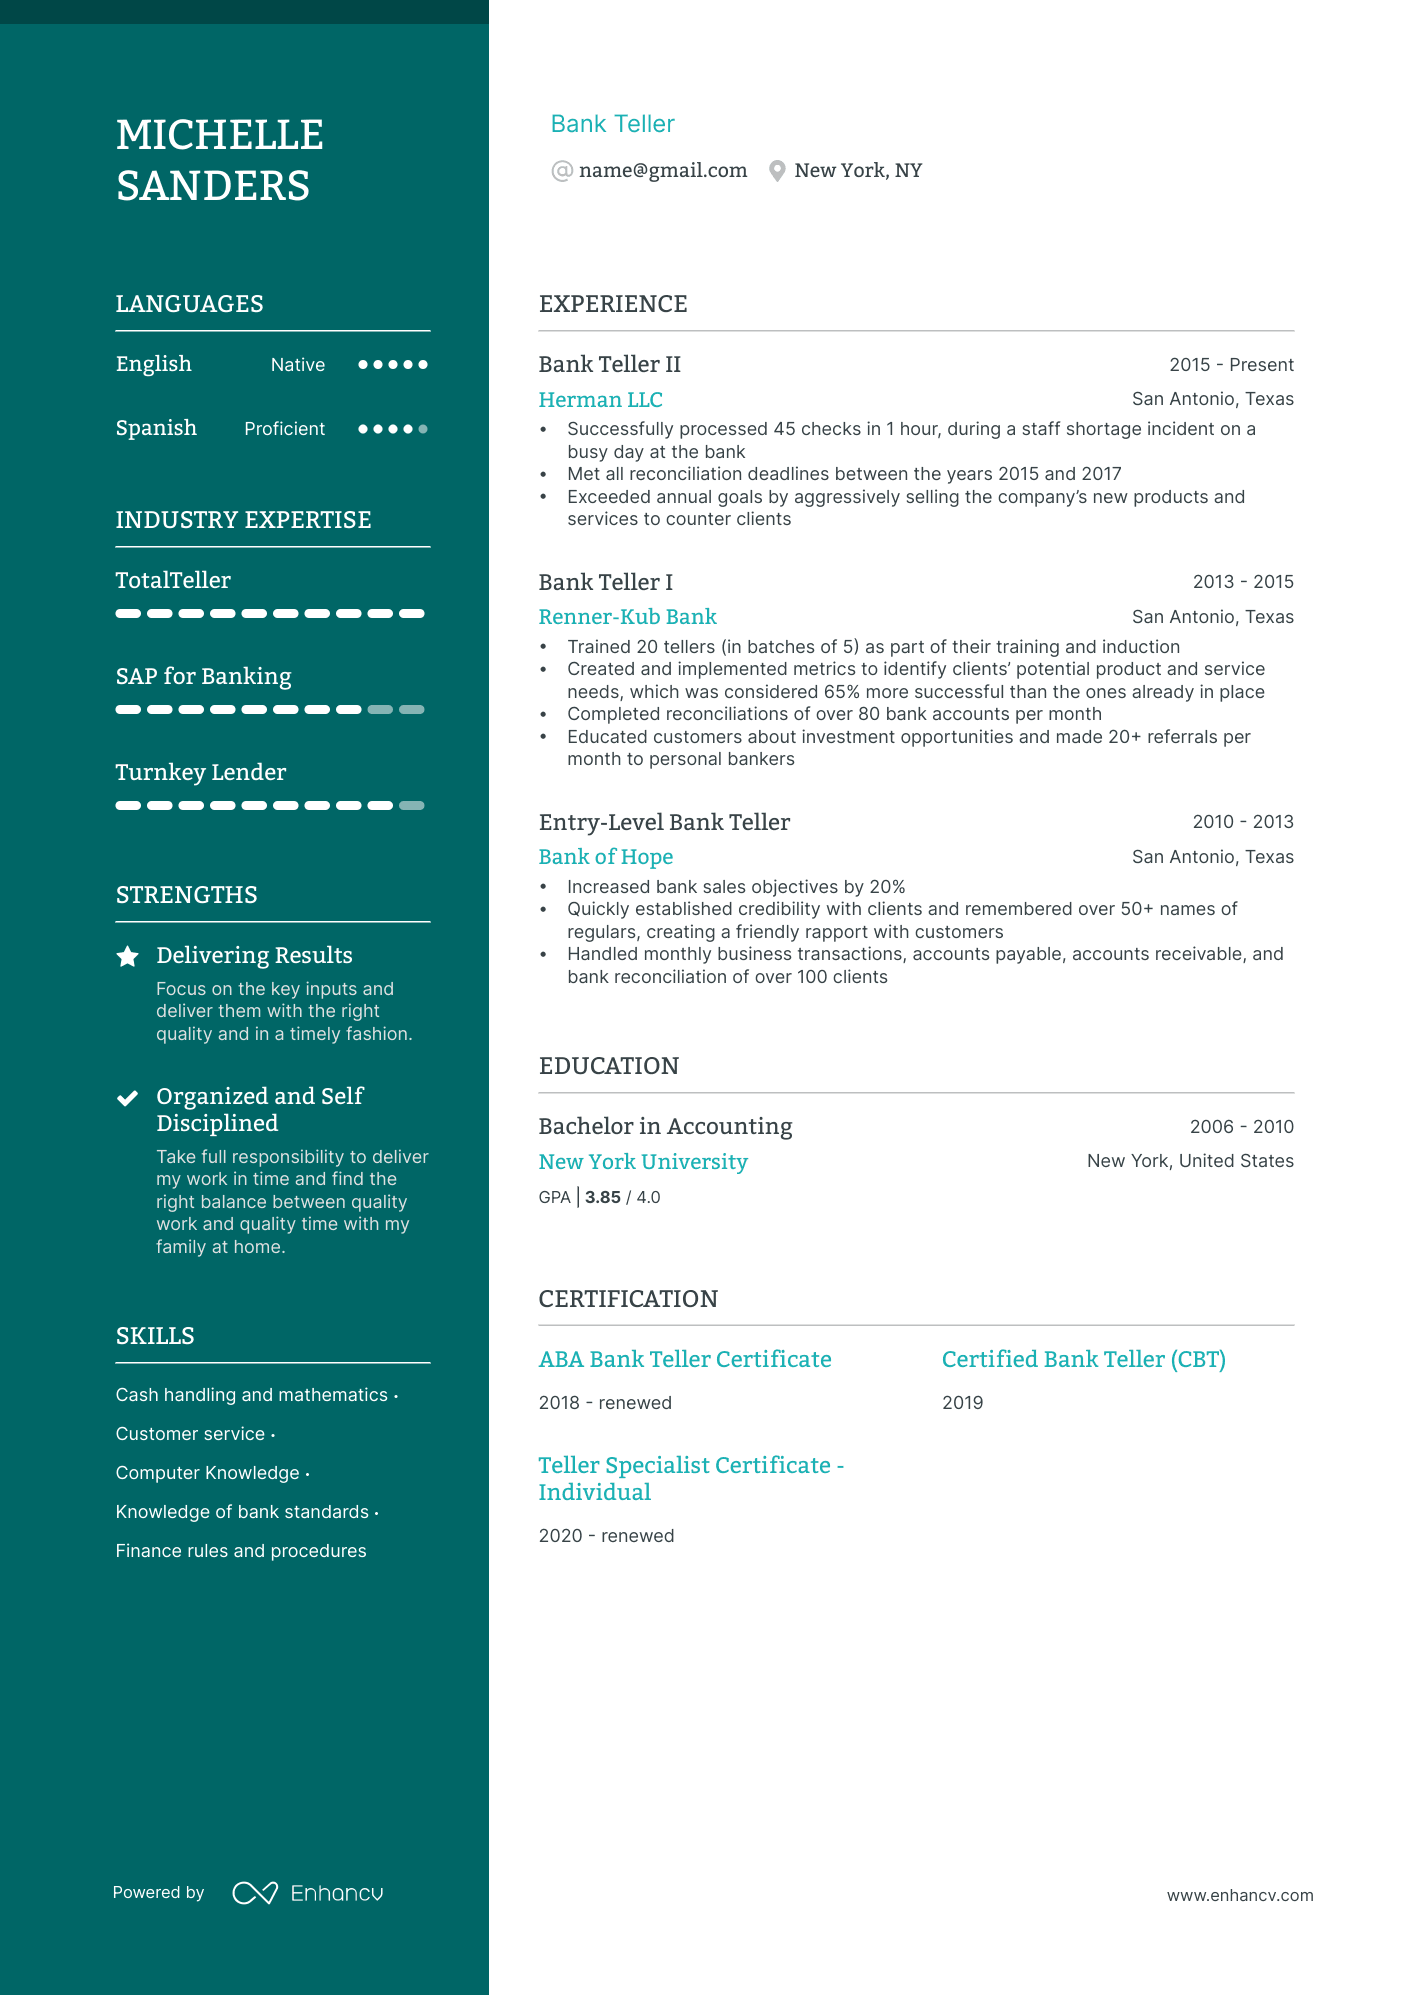 Bank Teller resume example